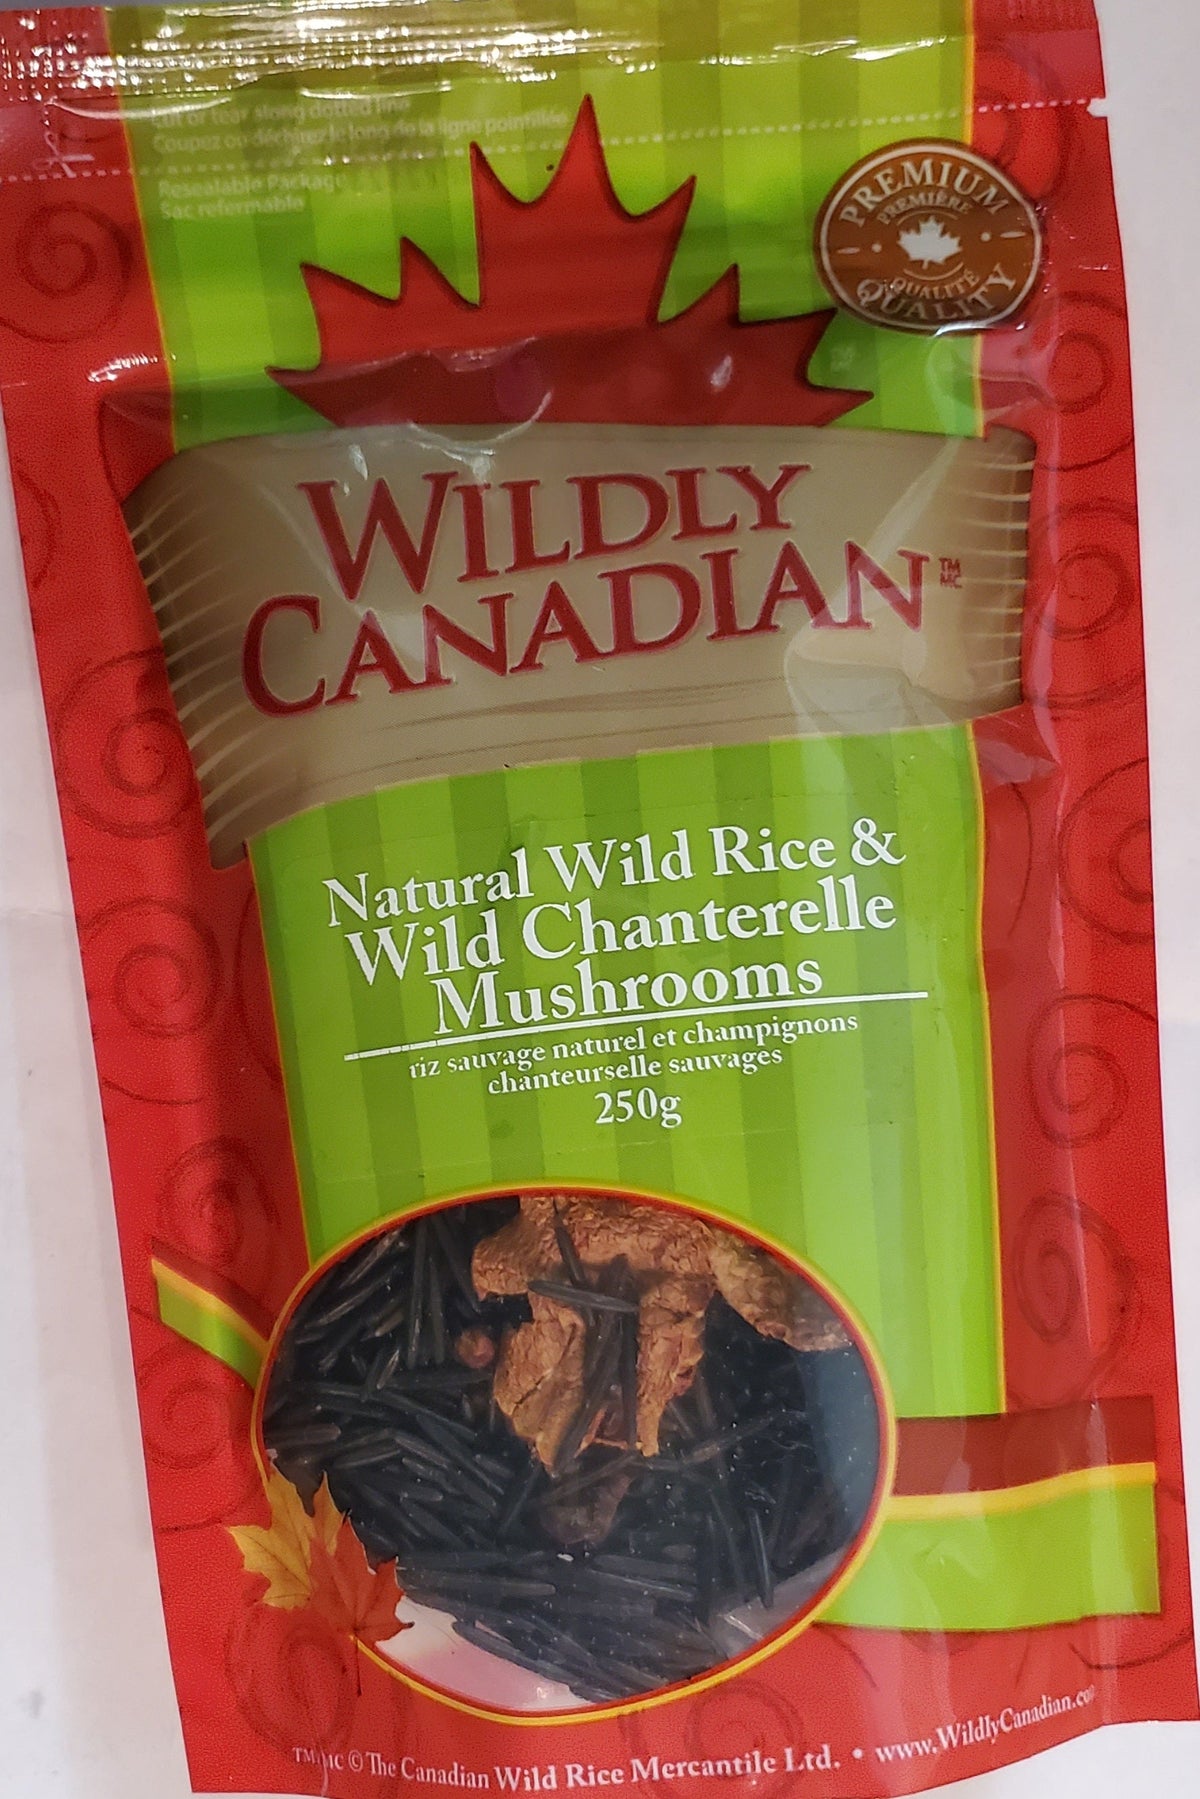 Natural Canadian Wild Rice & Wild Chanterelle Mushrooms